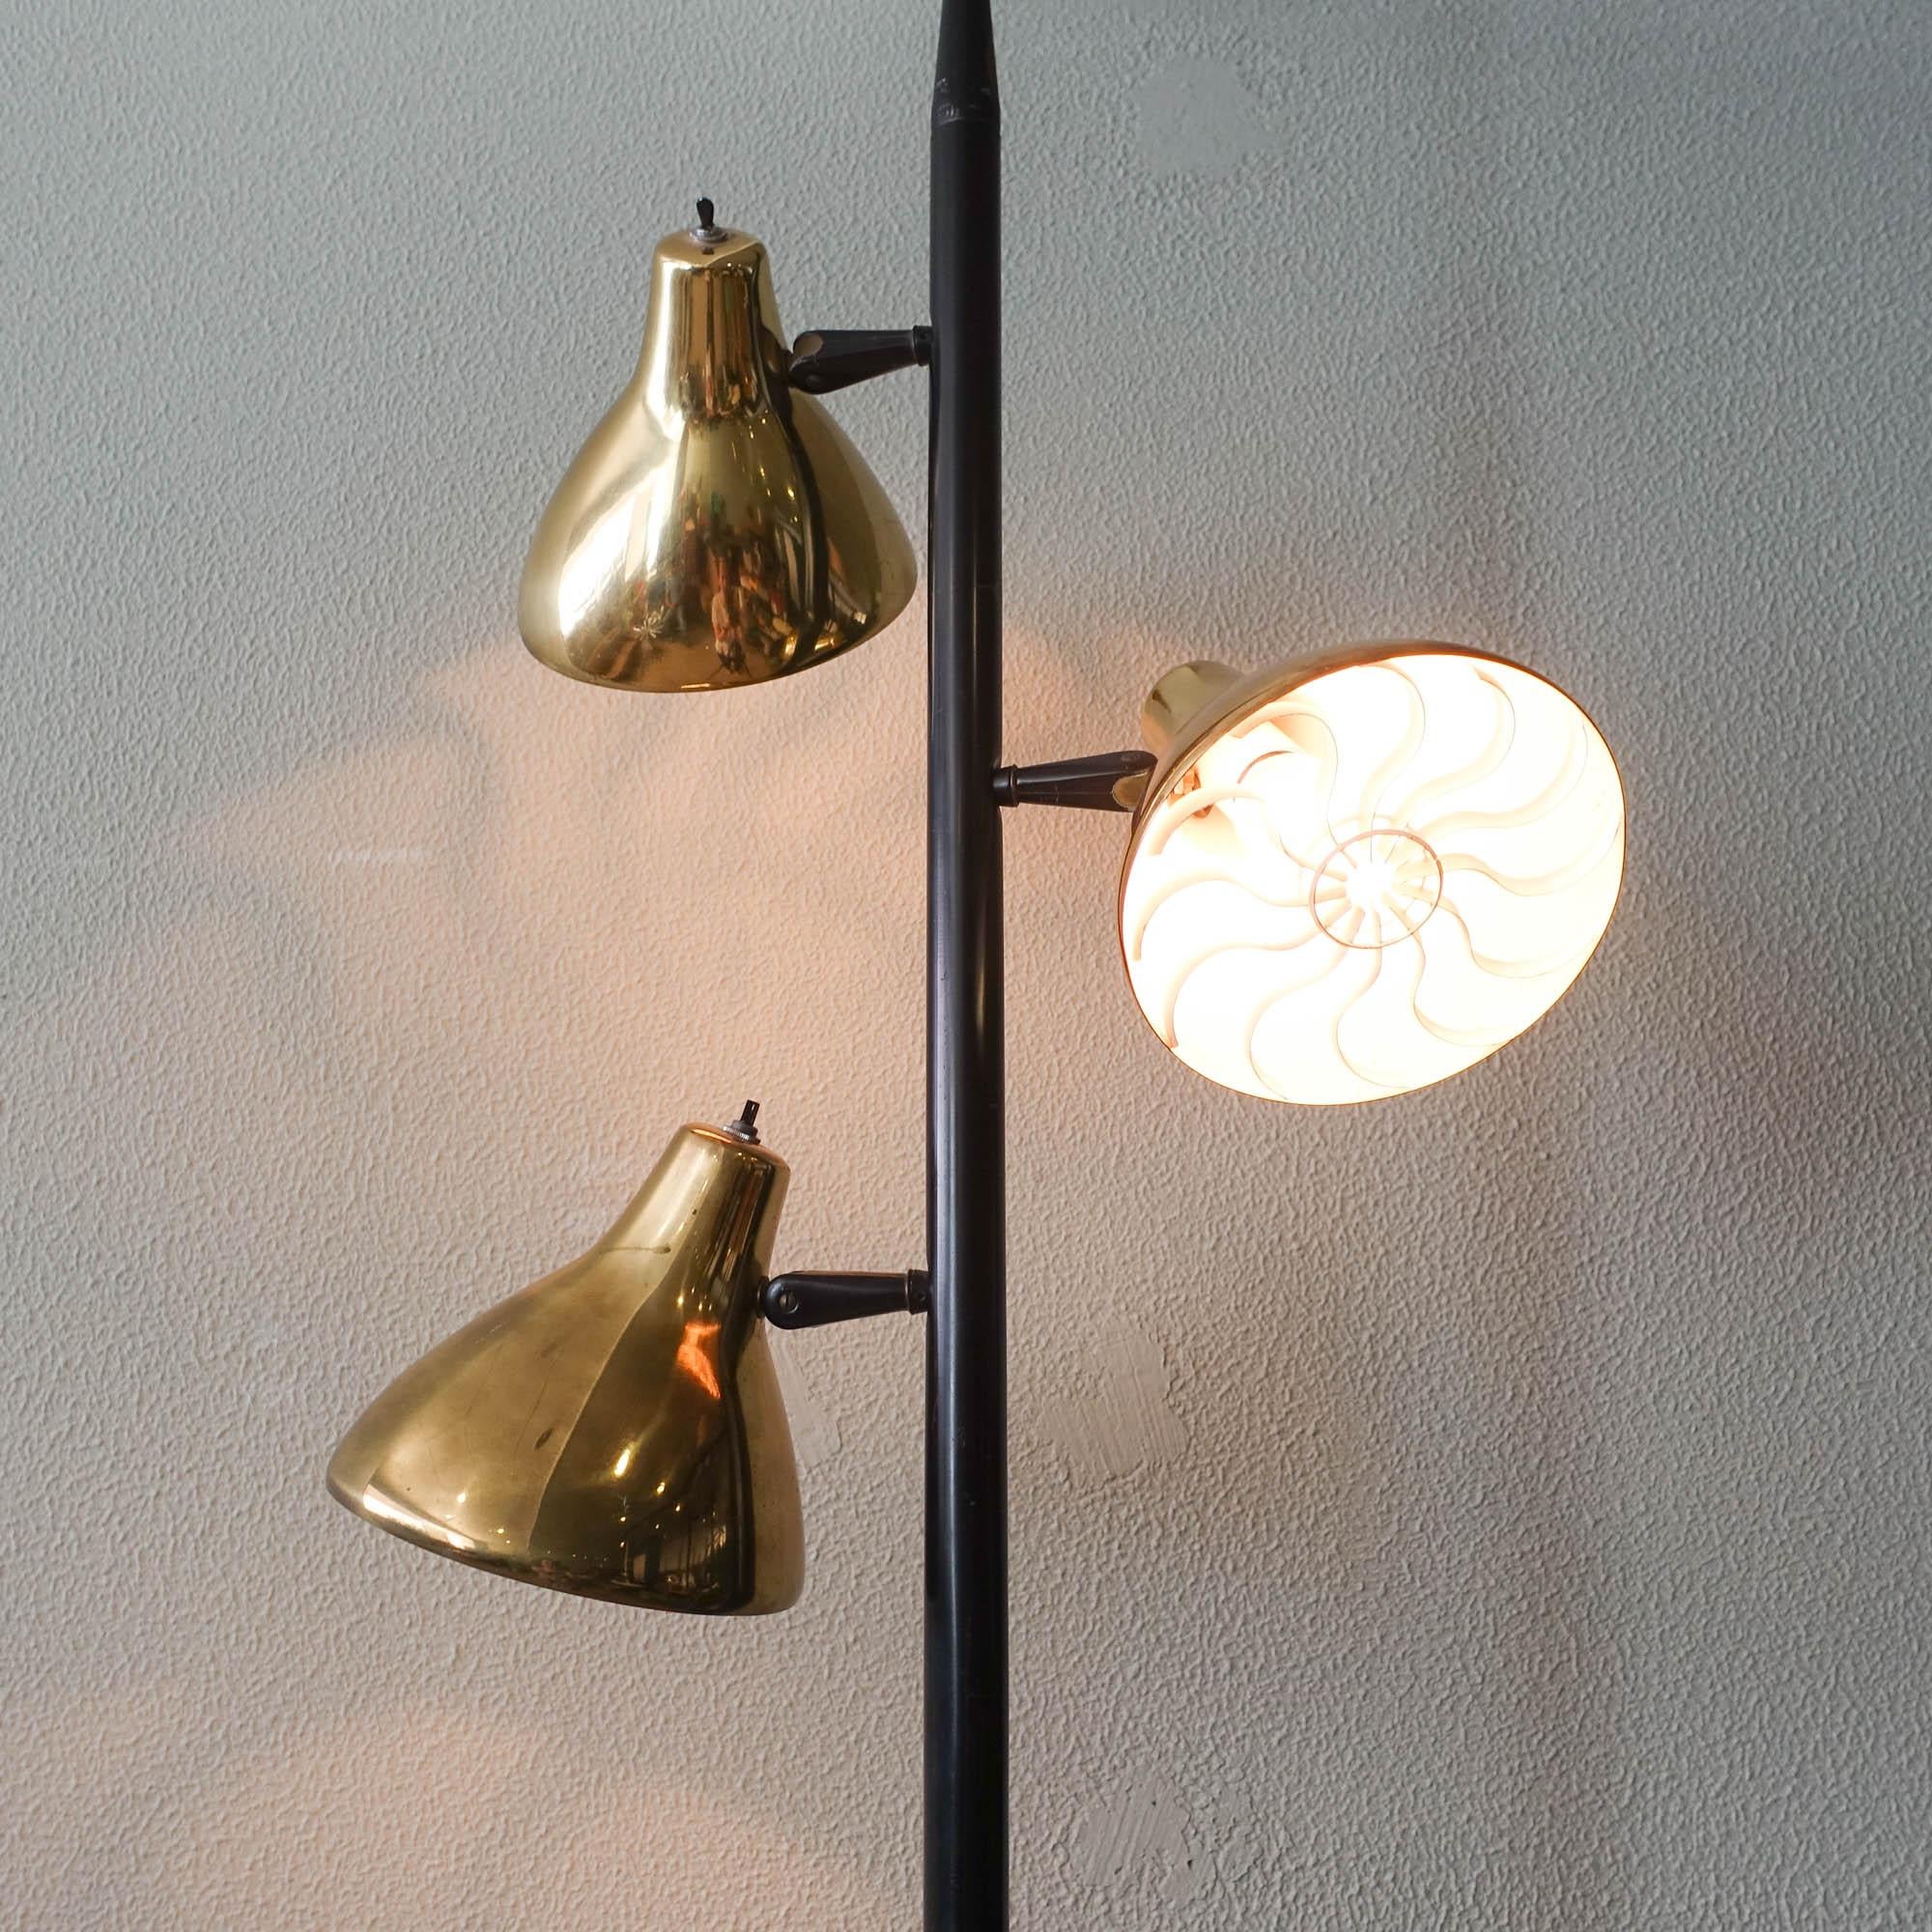 Midcentury Adjustable Tension Floor Pole Lamp by Gerald Thurston for Lightolier 3